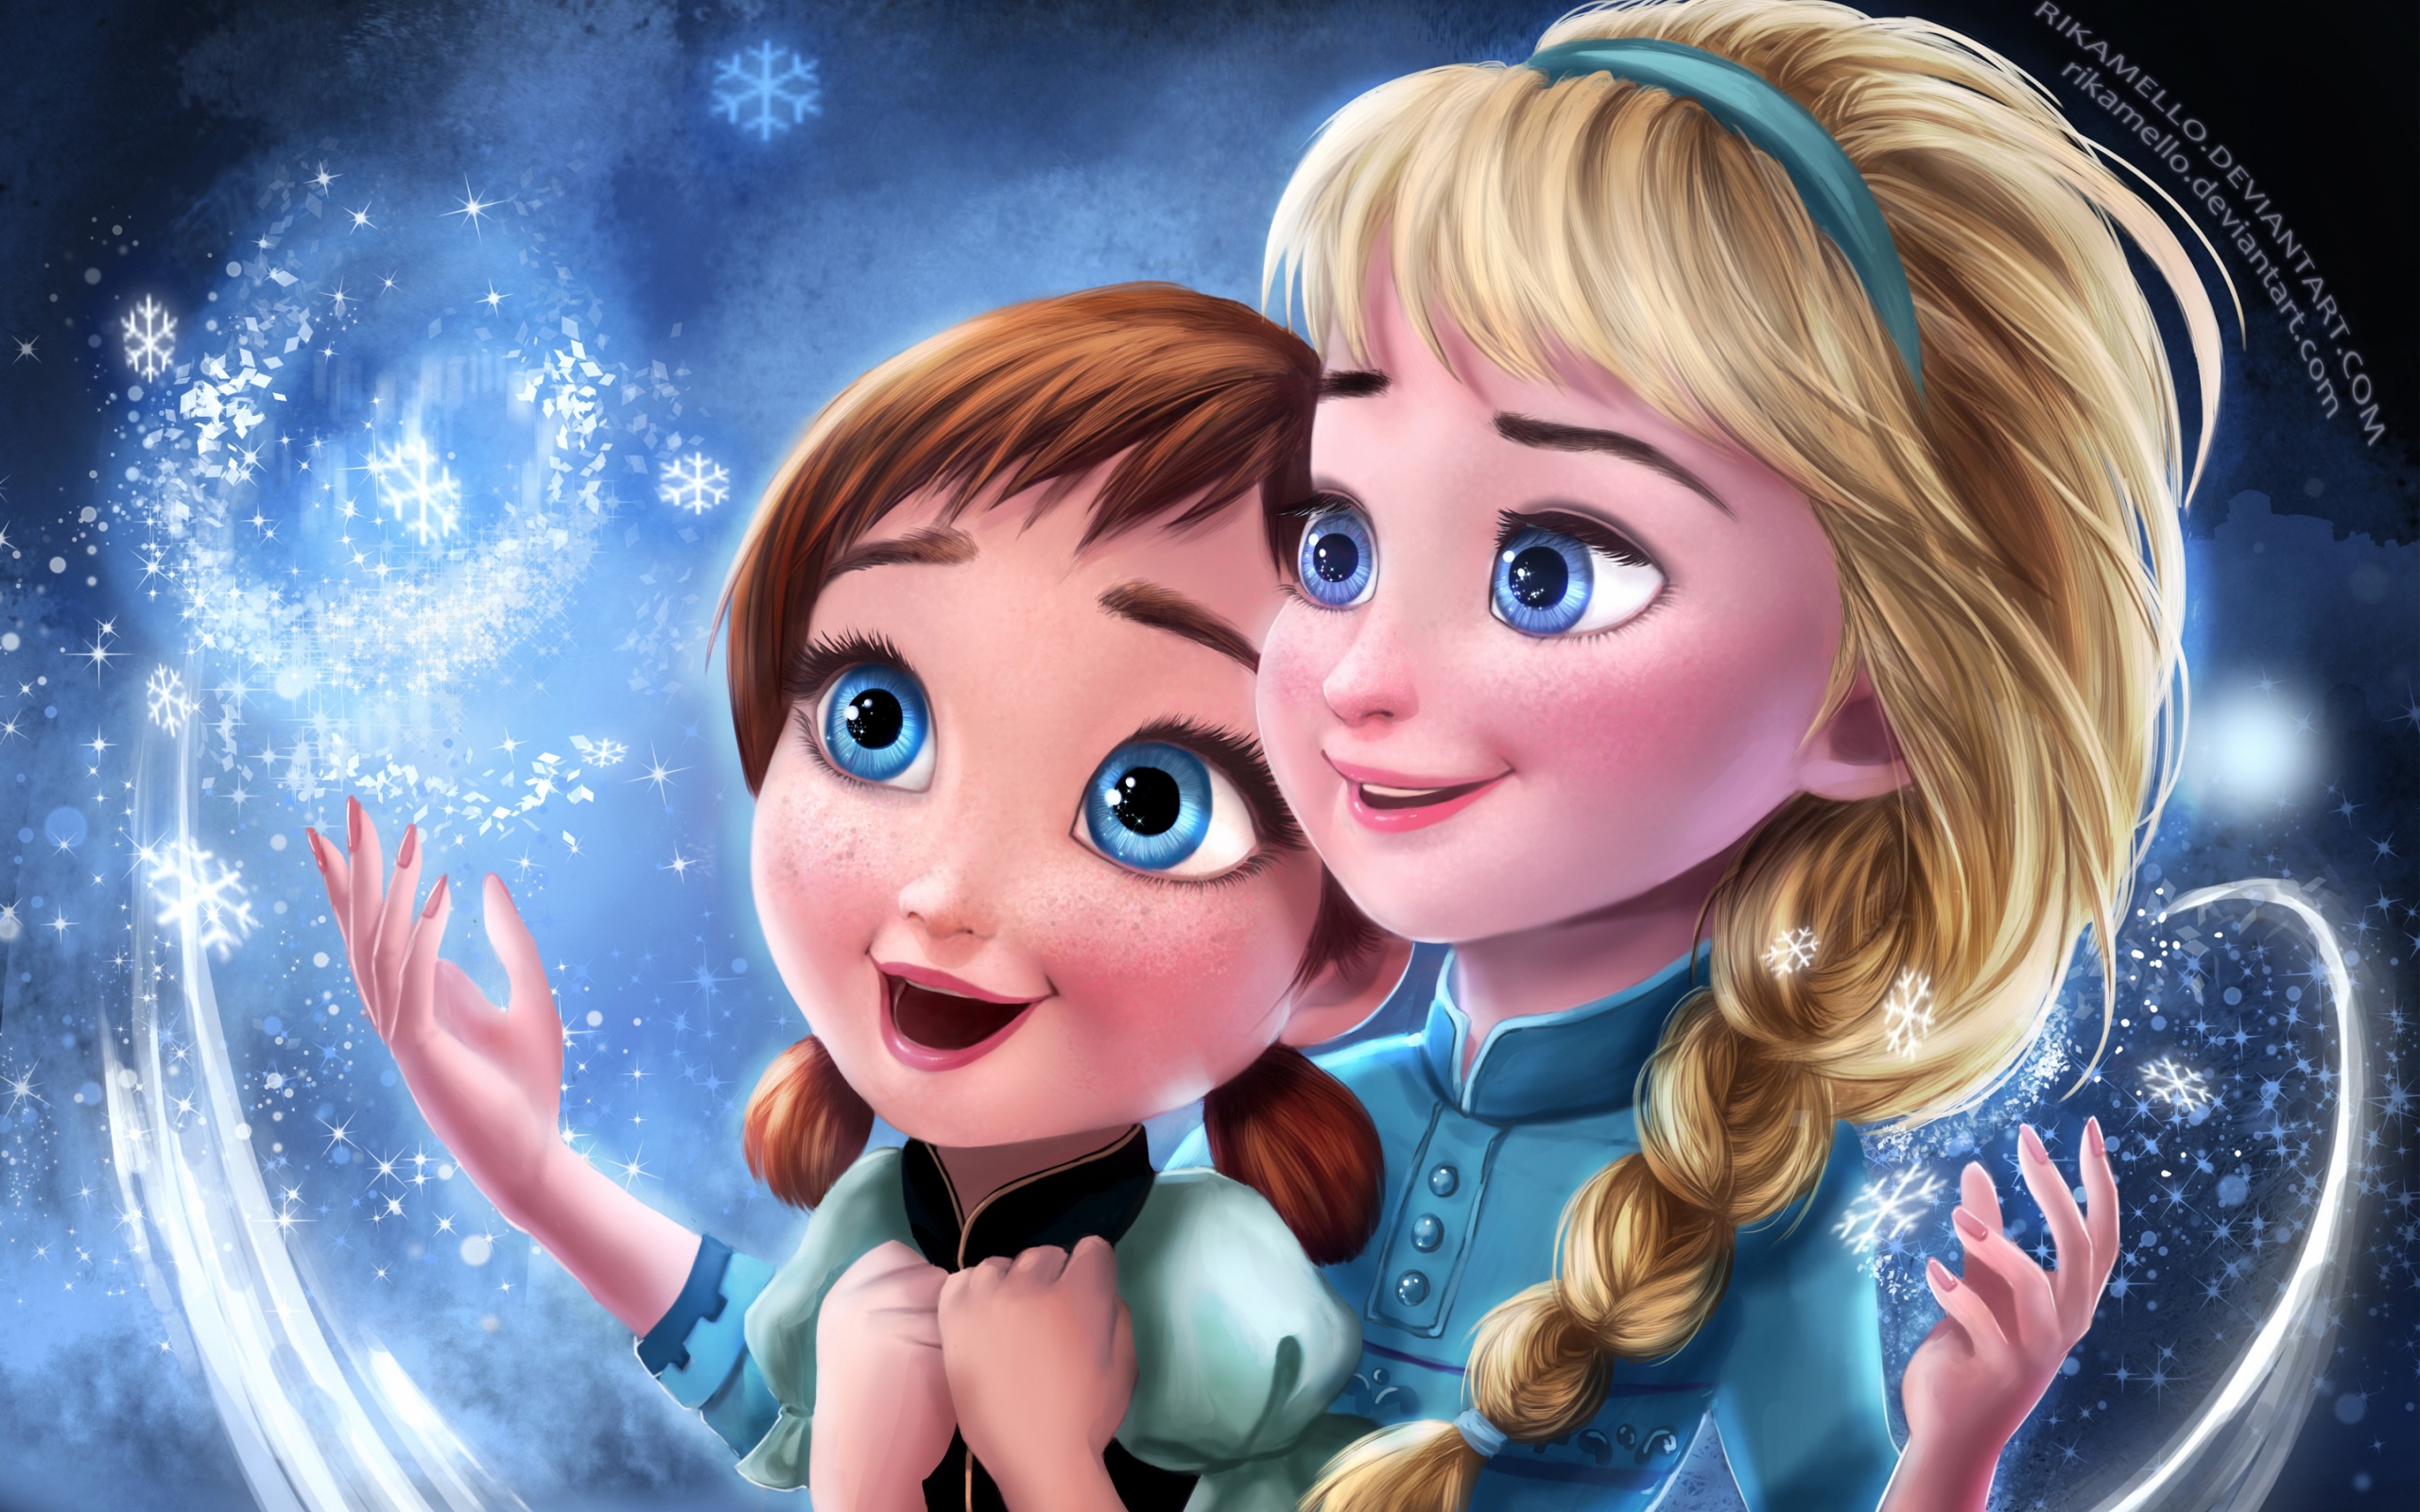 Frozen Elsa Anna Sisters Wallpaper in jpg format for free